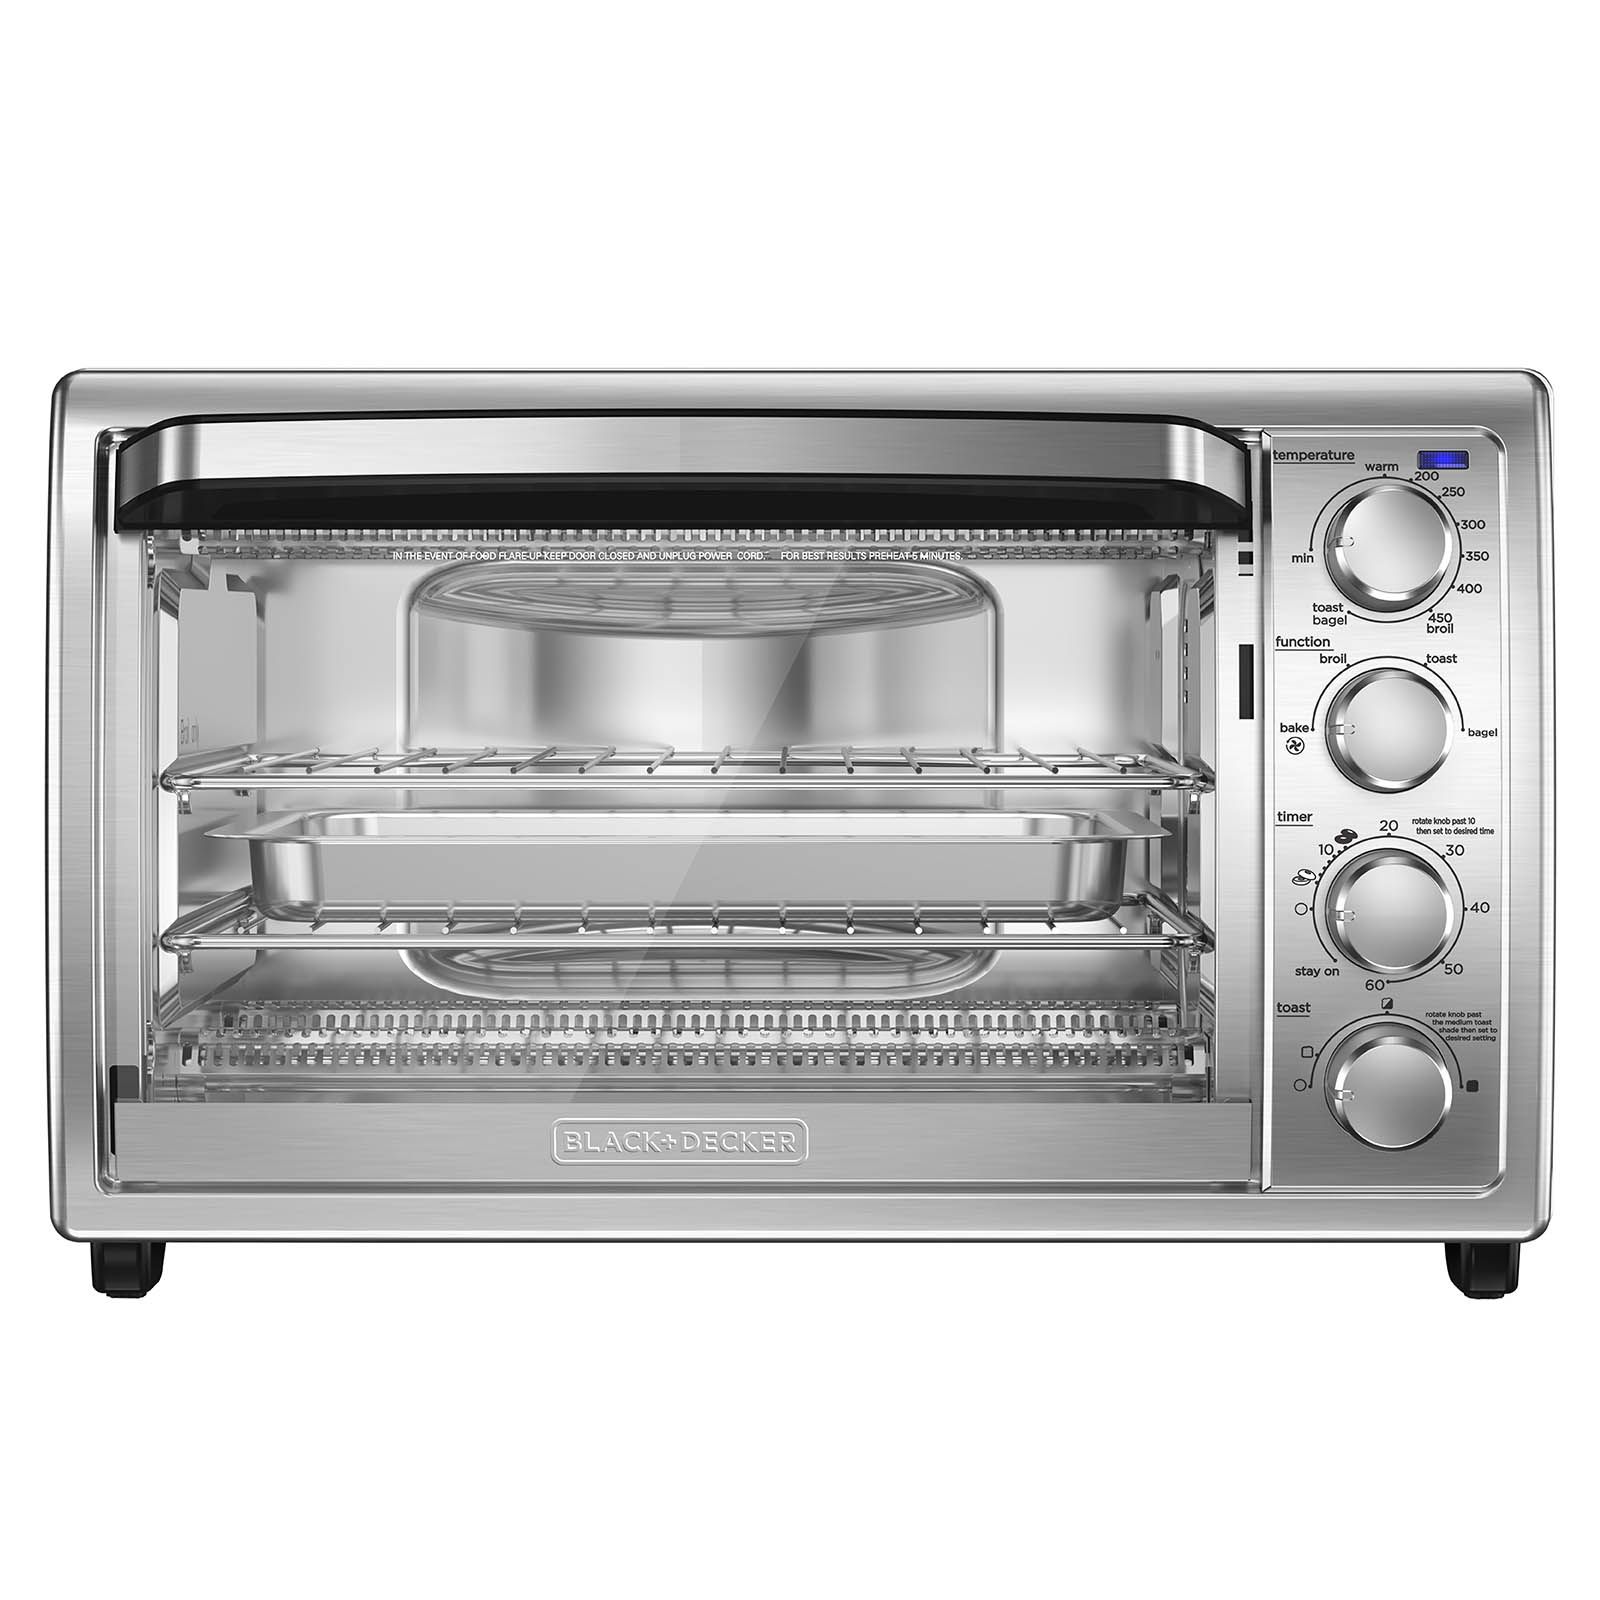 Black & Decker Digital No Pre-heat Convection Toaster Oven w/ 9